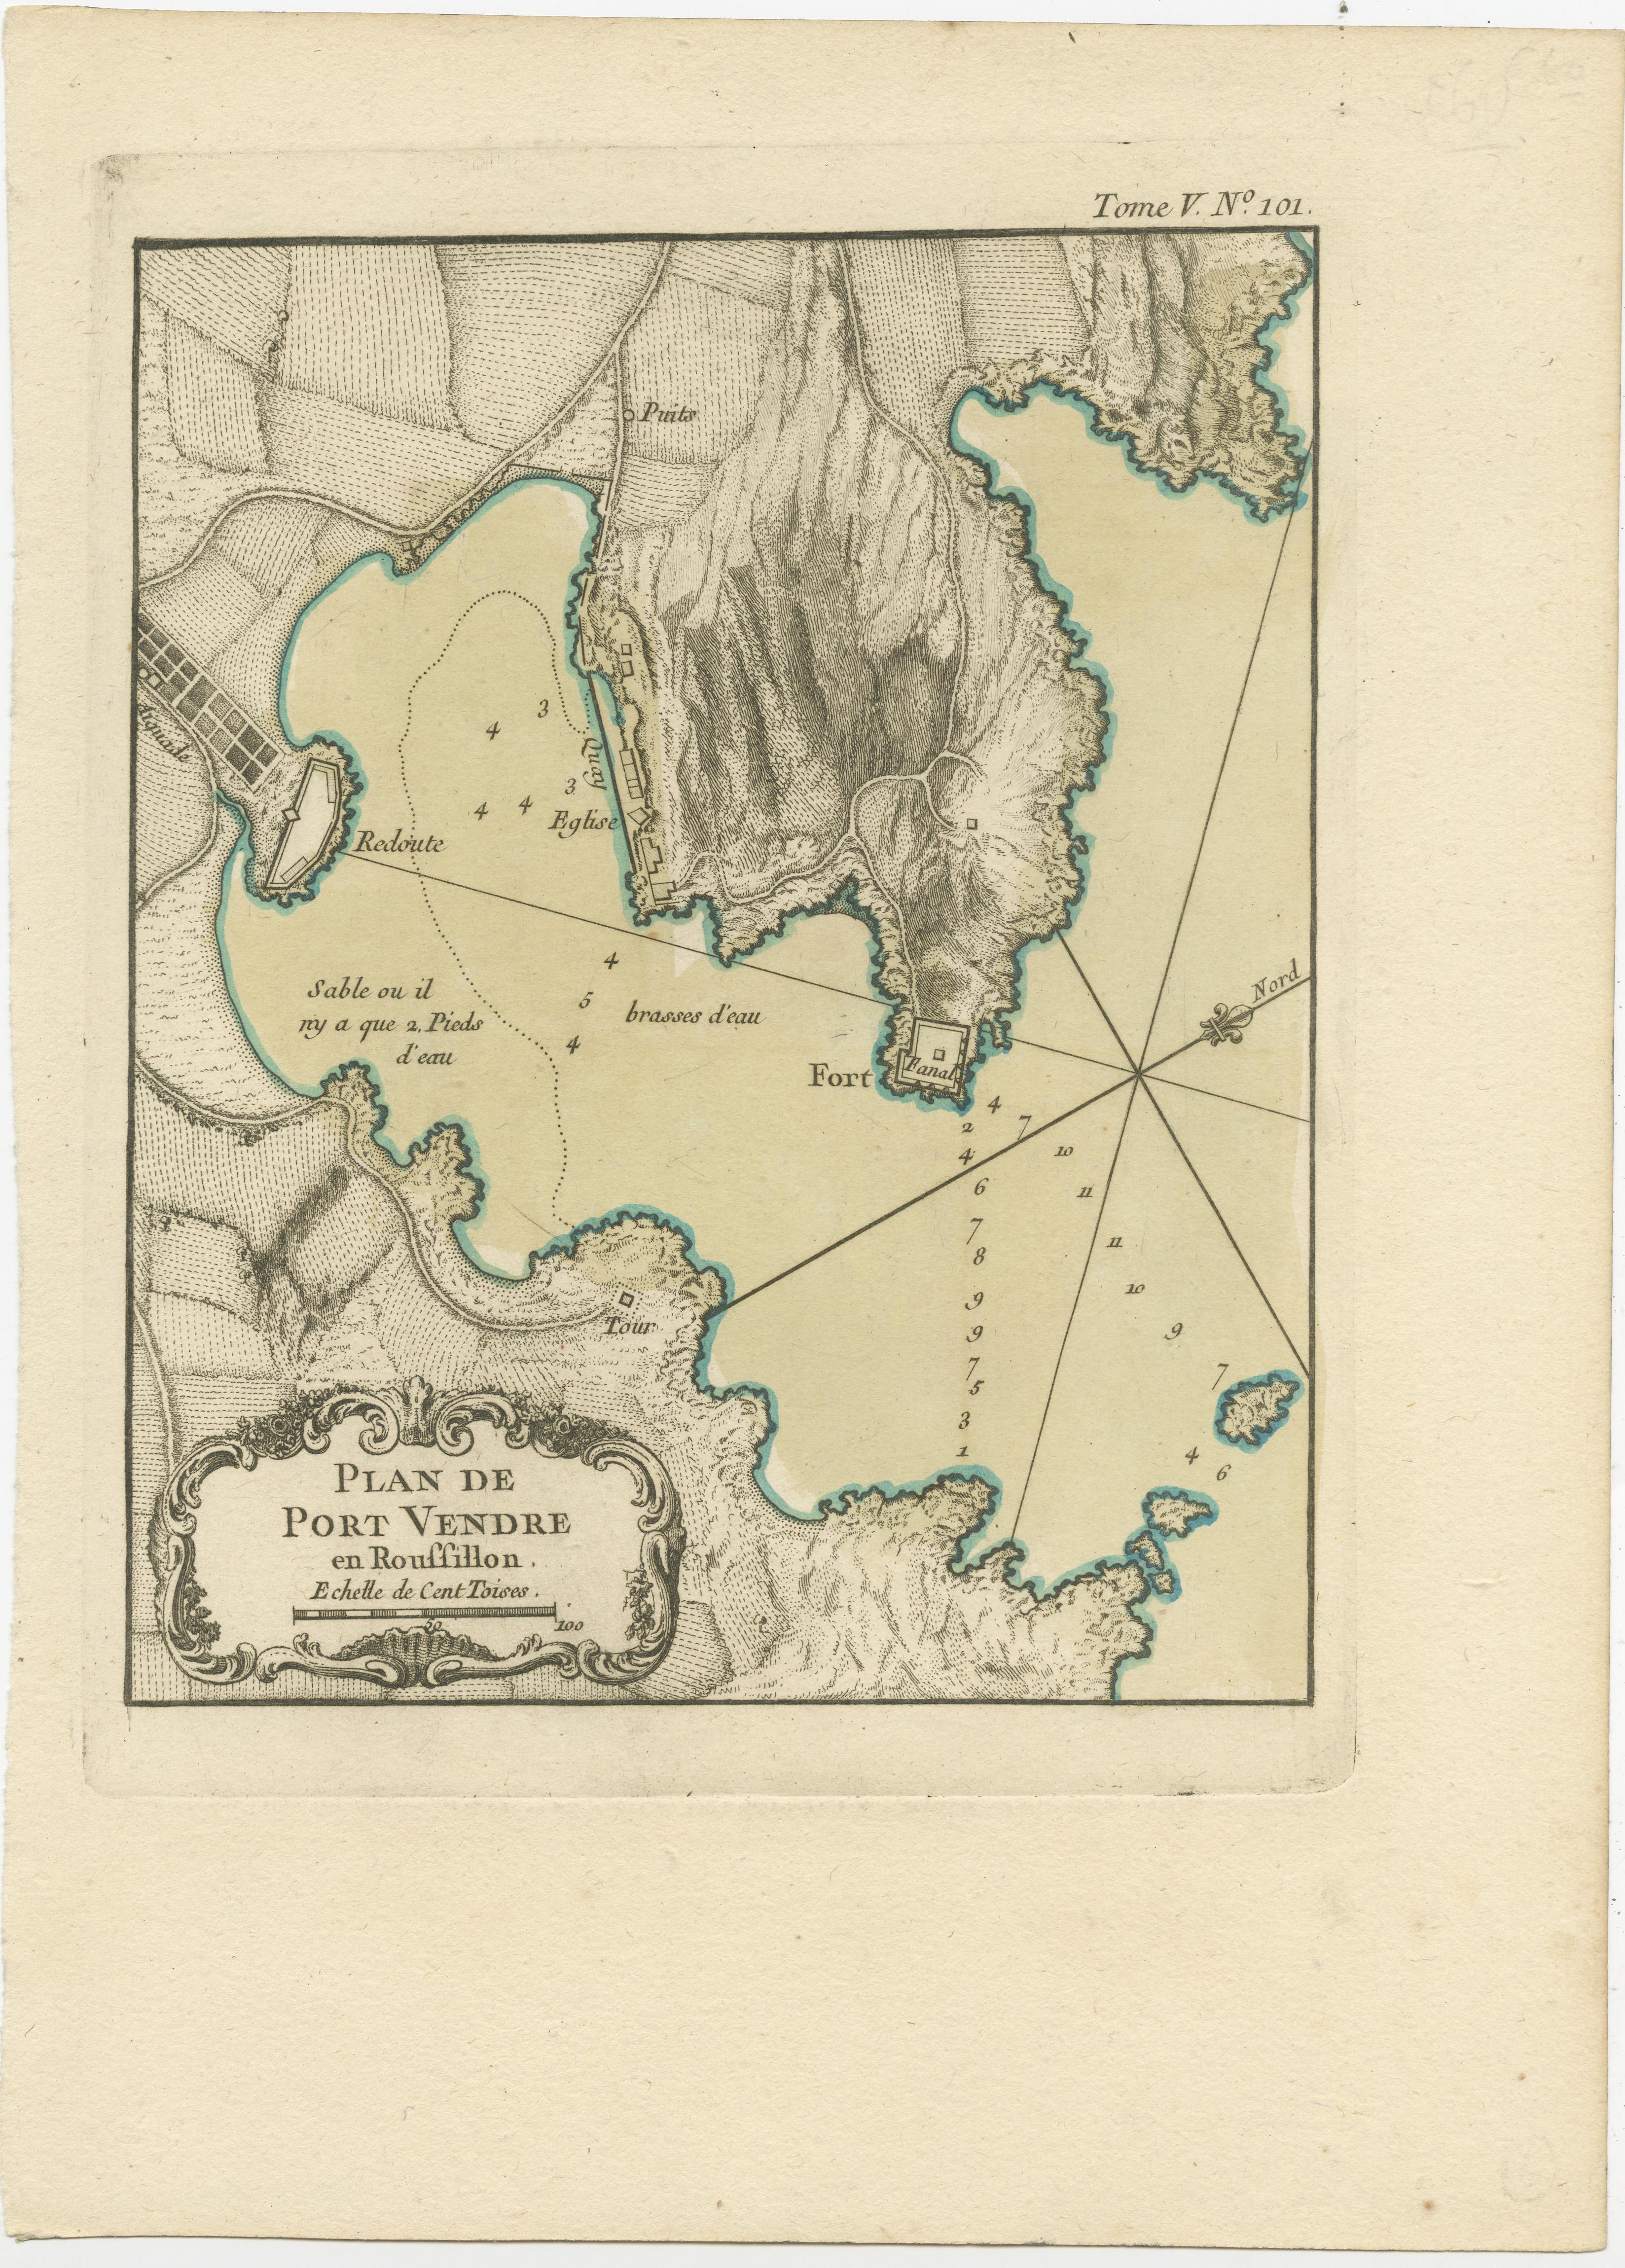 Antique map titled 'Plan de Port Vendre en Roussillon'. Original plan of Port-Vendres, Roussillon, France. This map originates from 'Le Petit Atlas Maritime (..)' by J.N. Bellin. Published 1764. 

Bellin was an important maker of charts for the